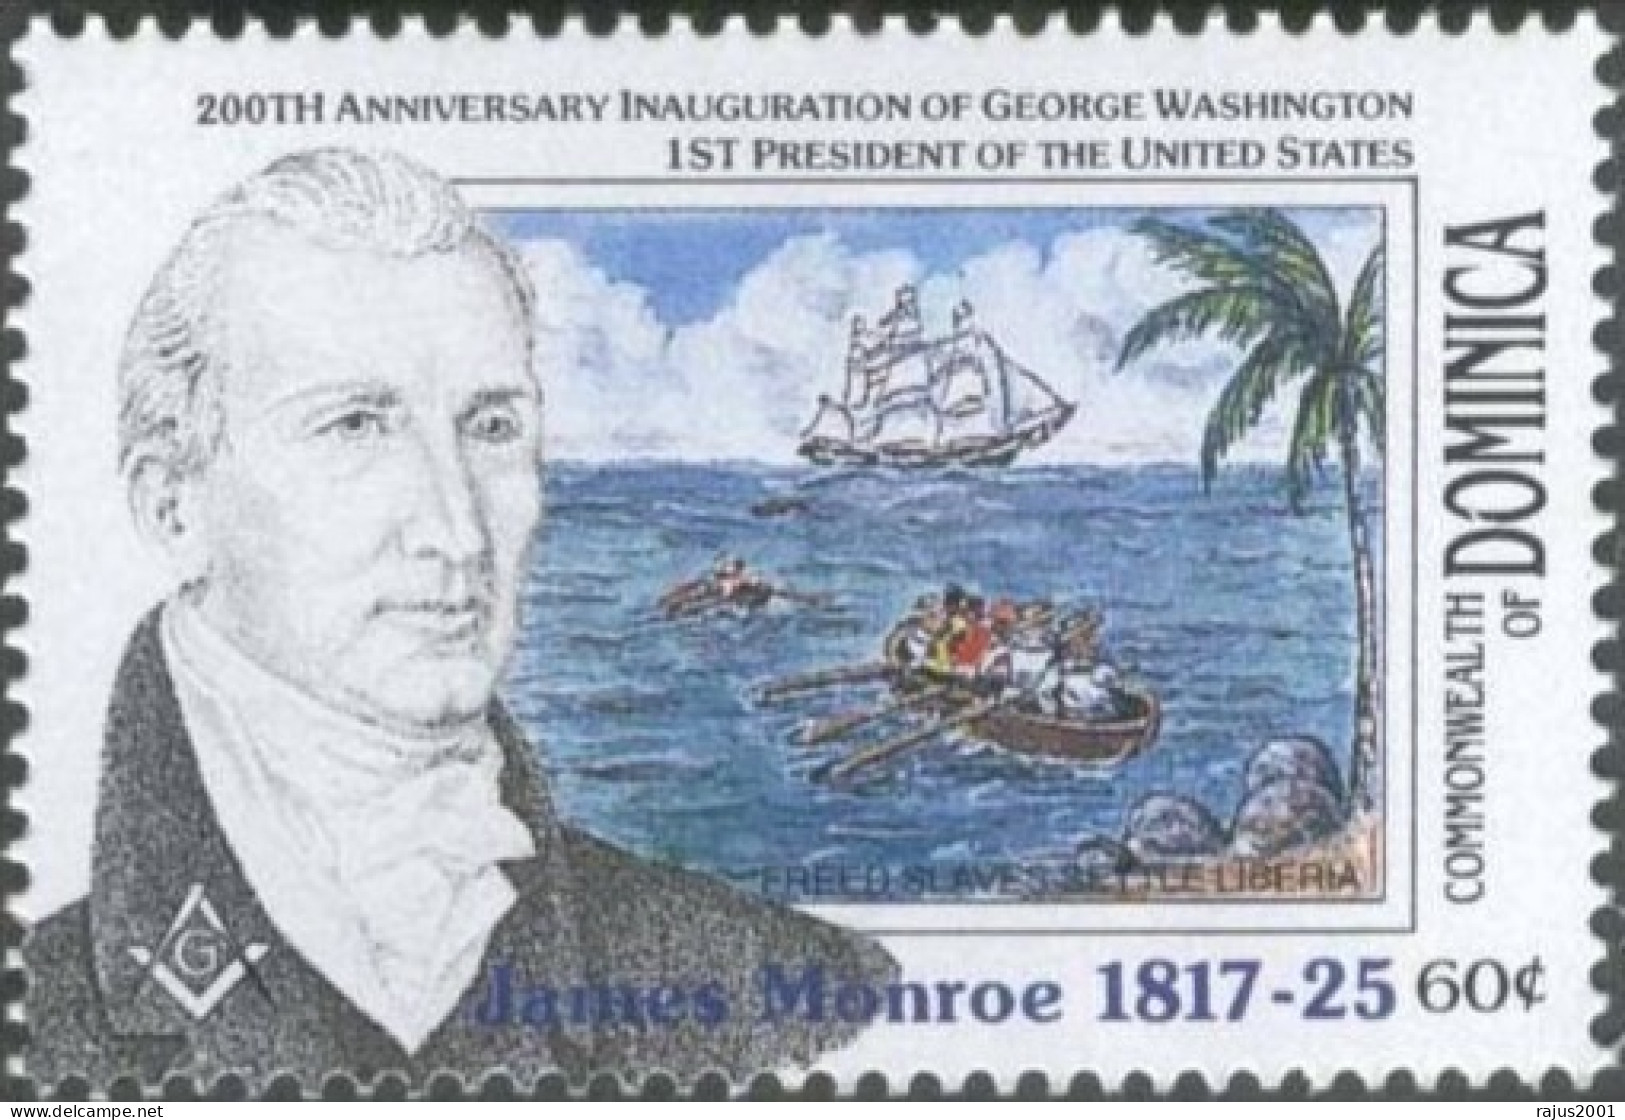 James Monroe, 5th American President, Williamsburg Lodge, Freemasonry, Freed Slaves Settlement Liberia, MNH Dominica - Vrijmetselarij